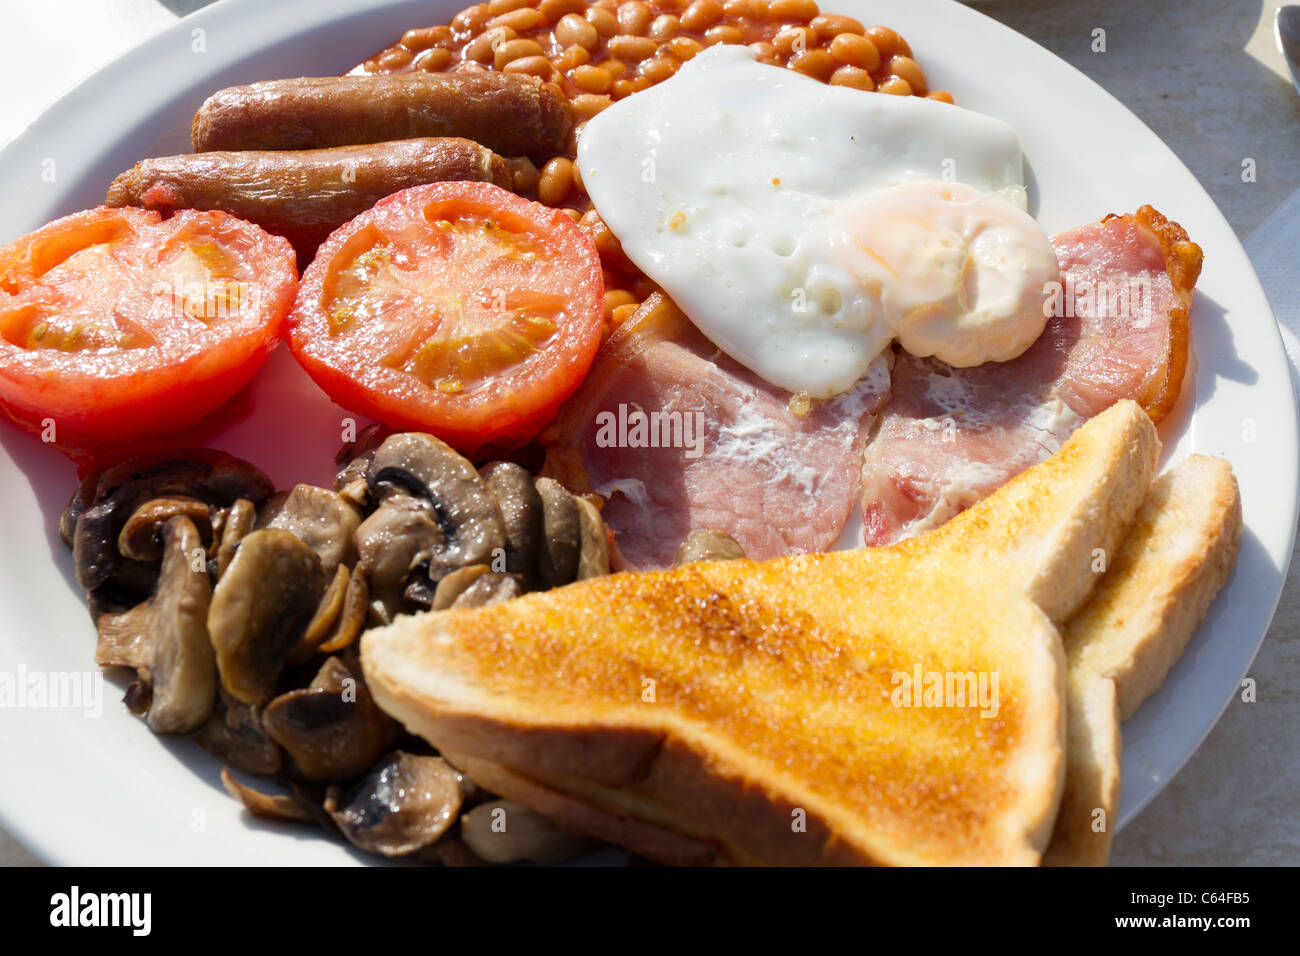 A full English breakfast Stock Photo